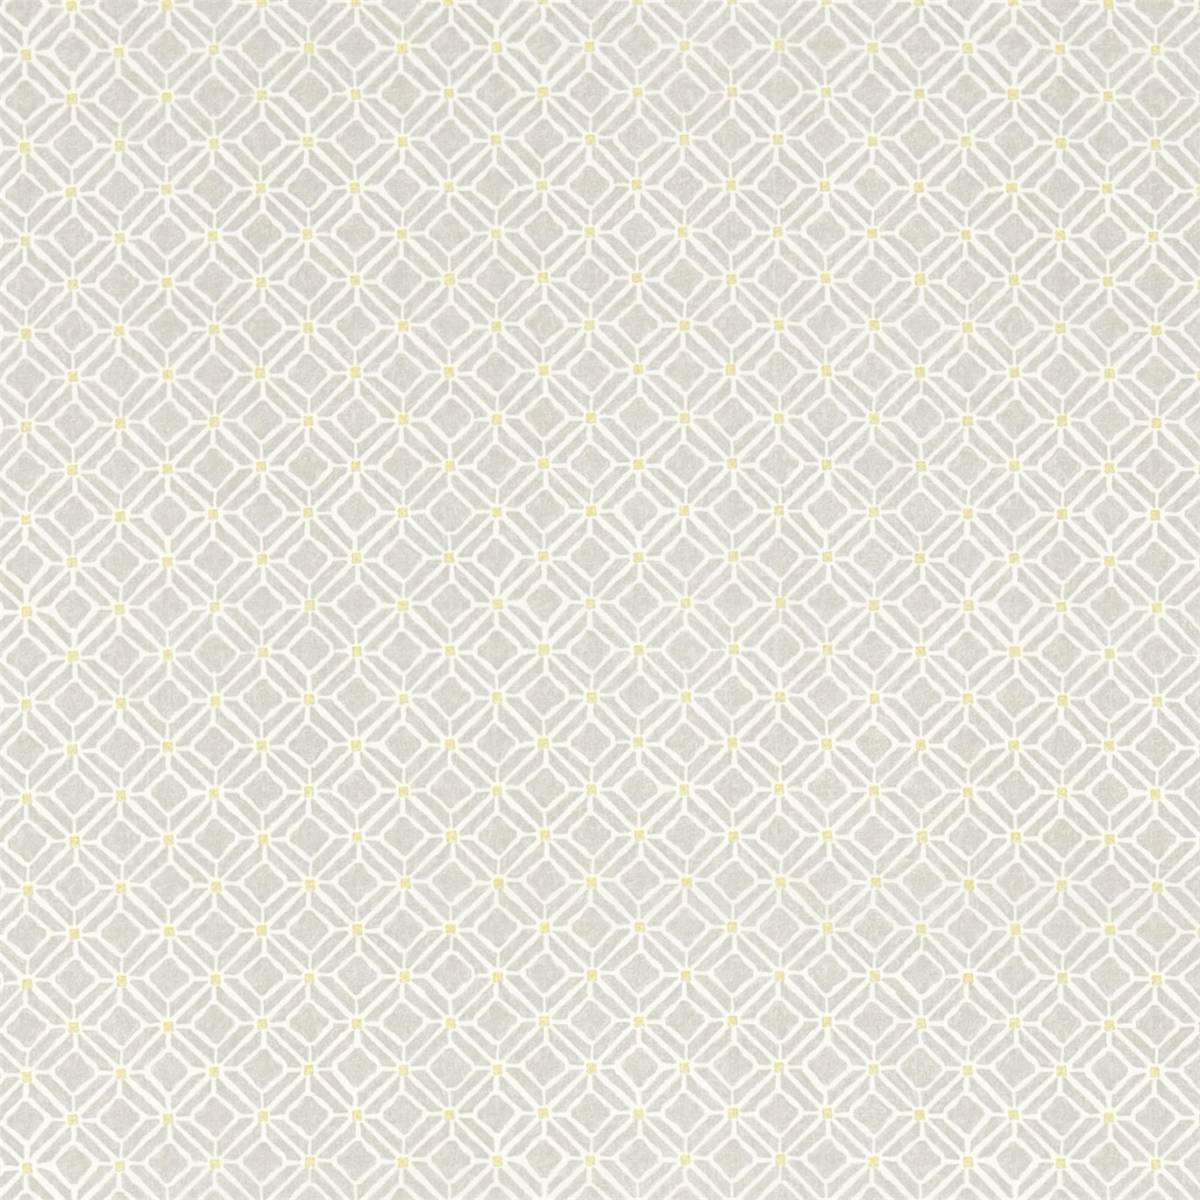 Fretwork Silver/Linden Fabric by Sanderson